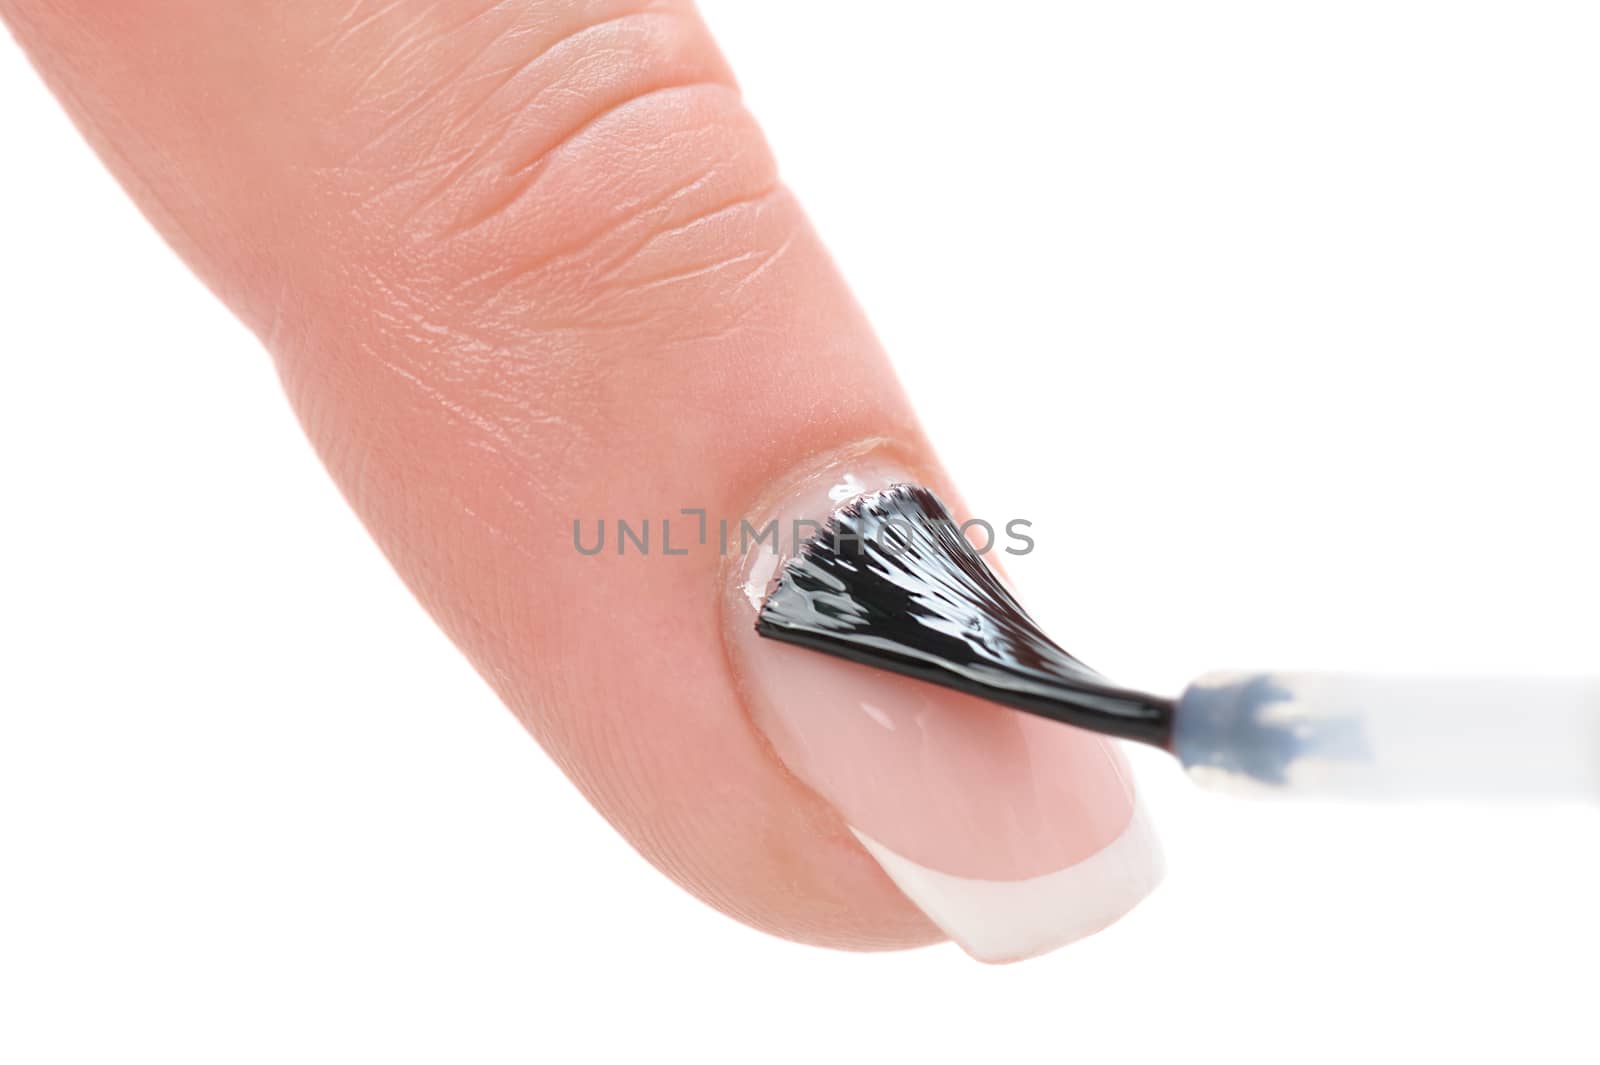 manicure applying, brushing fingernails with clear enamel